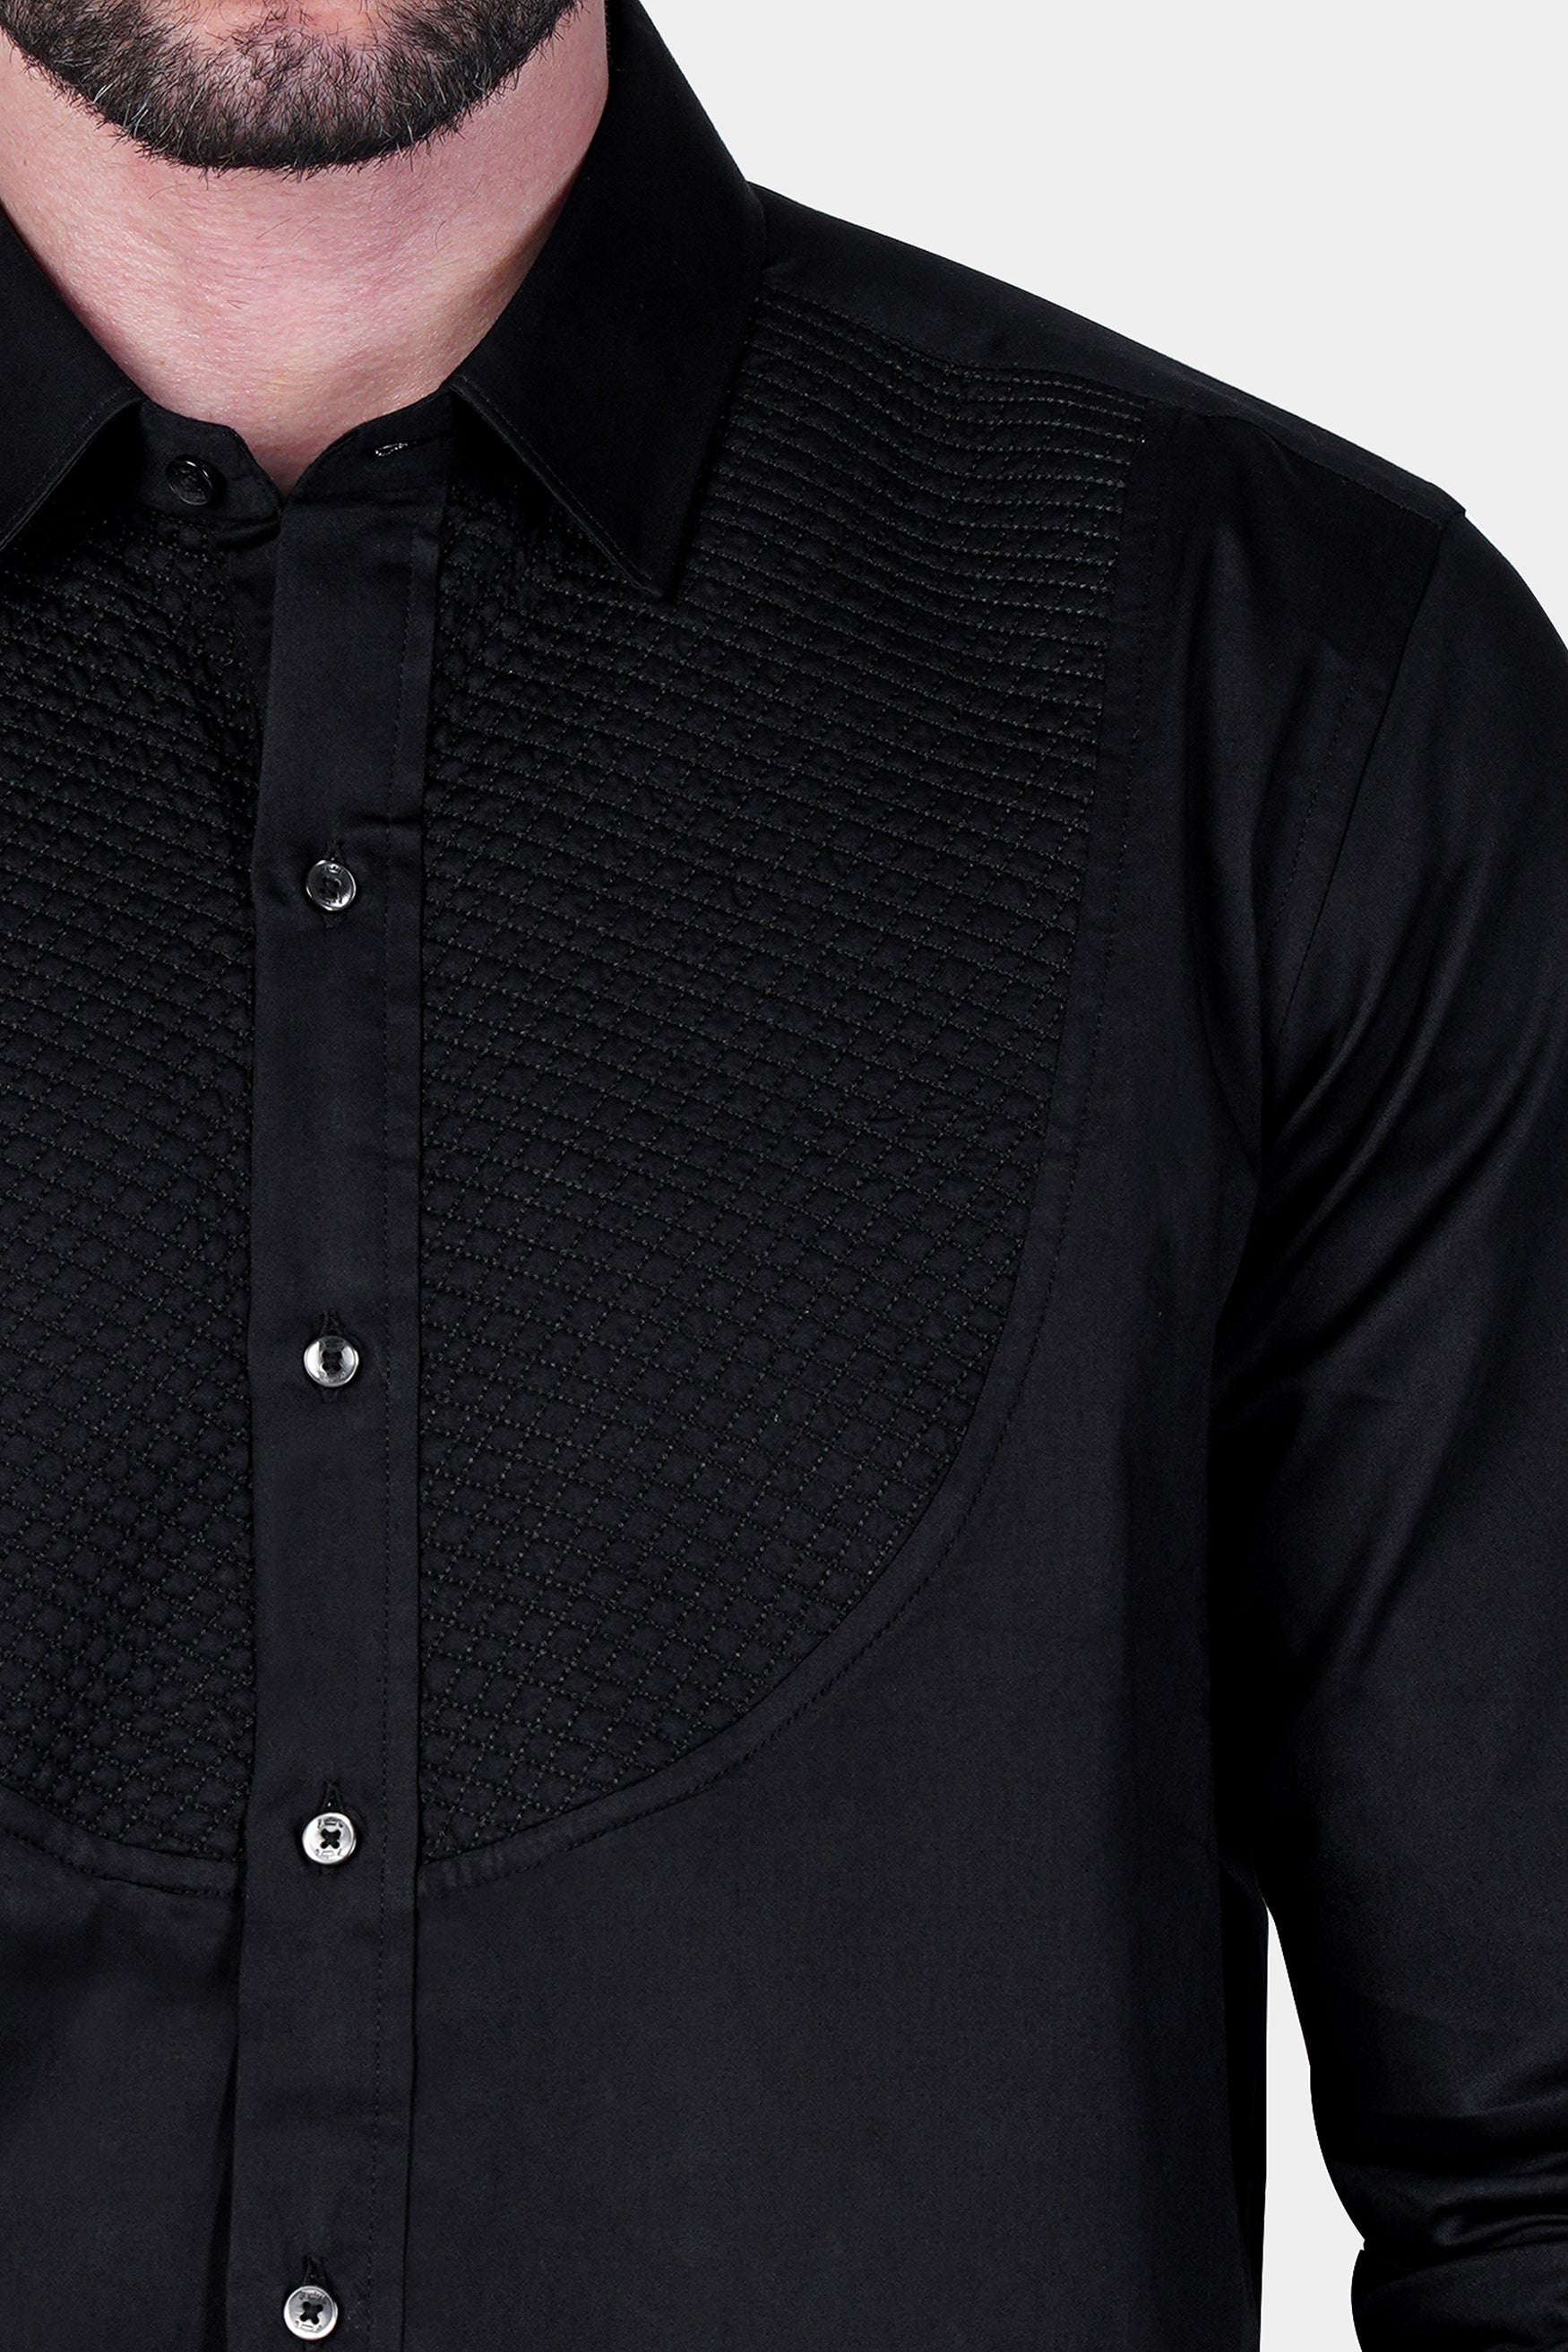 Jade Black Super Soft Premium Cotton Embroidered Designer Tuxedo Shirt